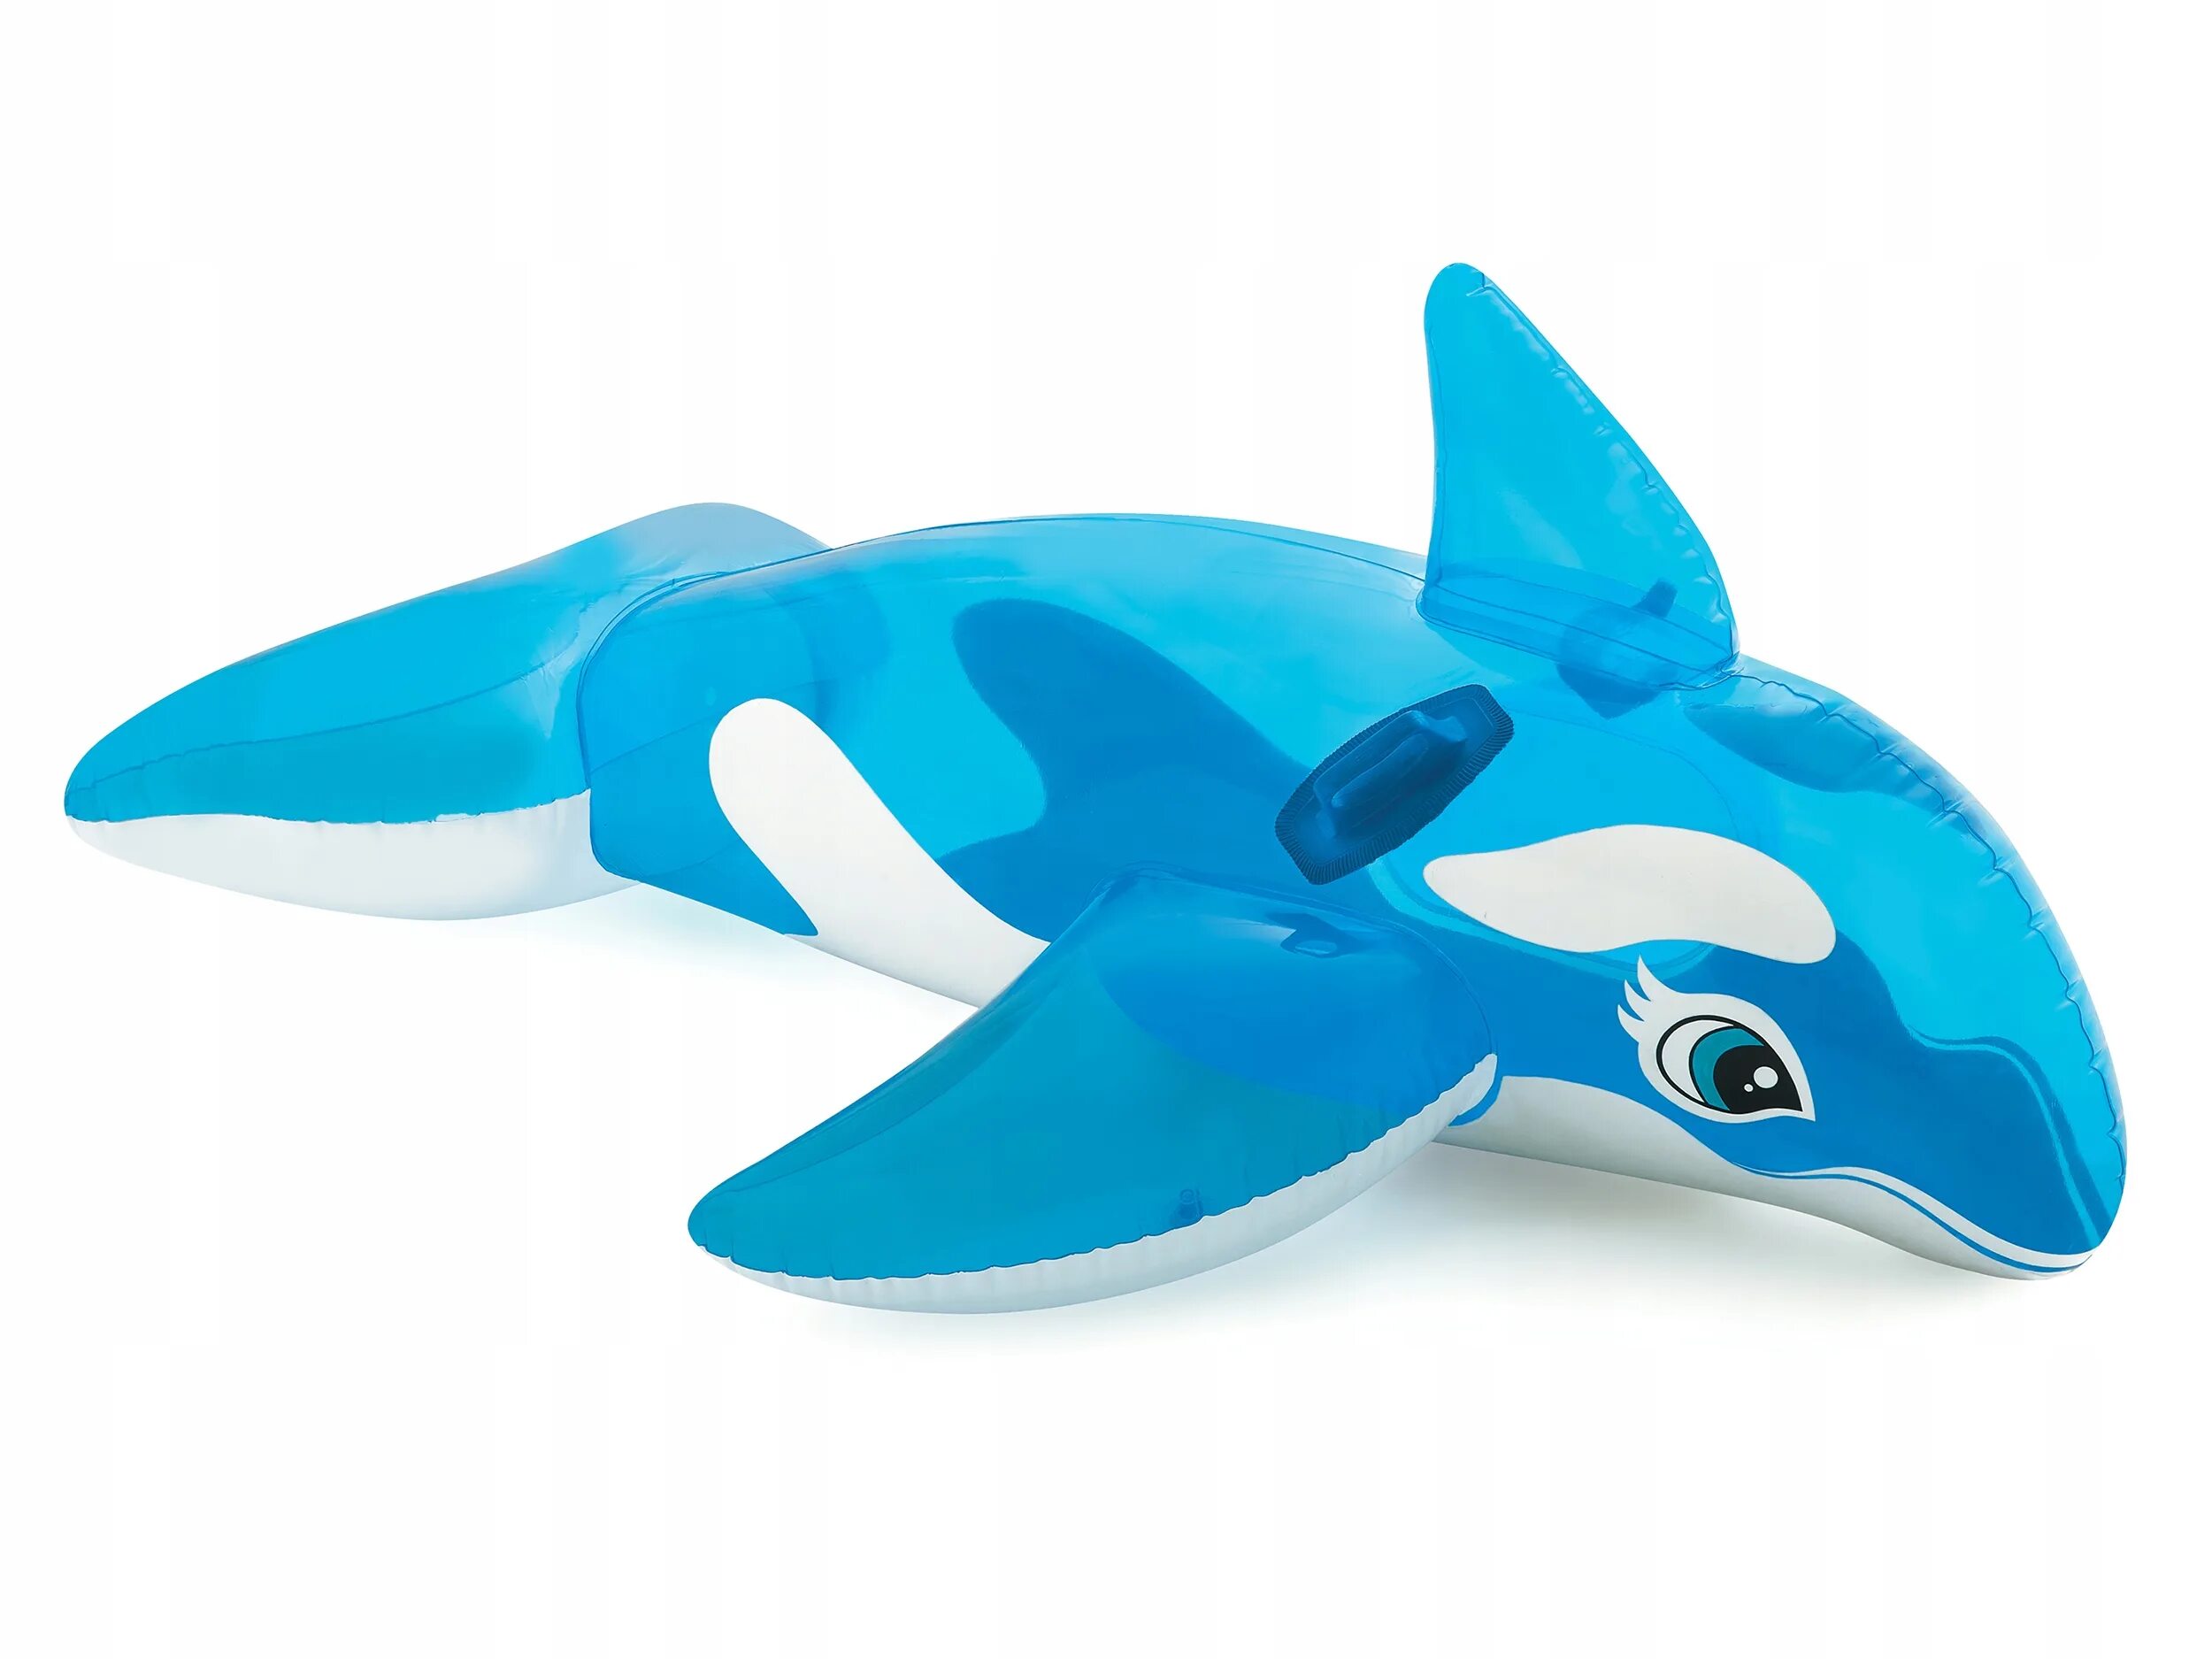 Надувная Касатка Intex. Надувная игрушка Intex Касатка. Игрушка для плавания кит , 152 х 114 см, от 3 лет, (58523np) Intex. Надувная игрушка-наездник Intex акула 57525. Надувная касатка